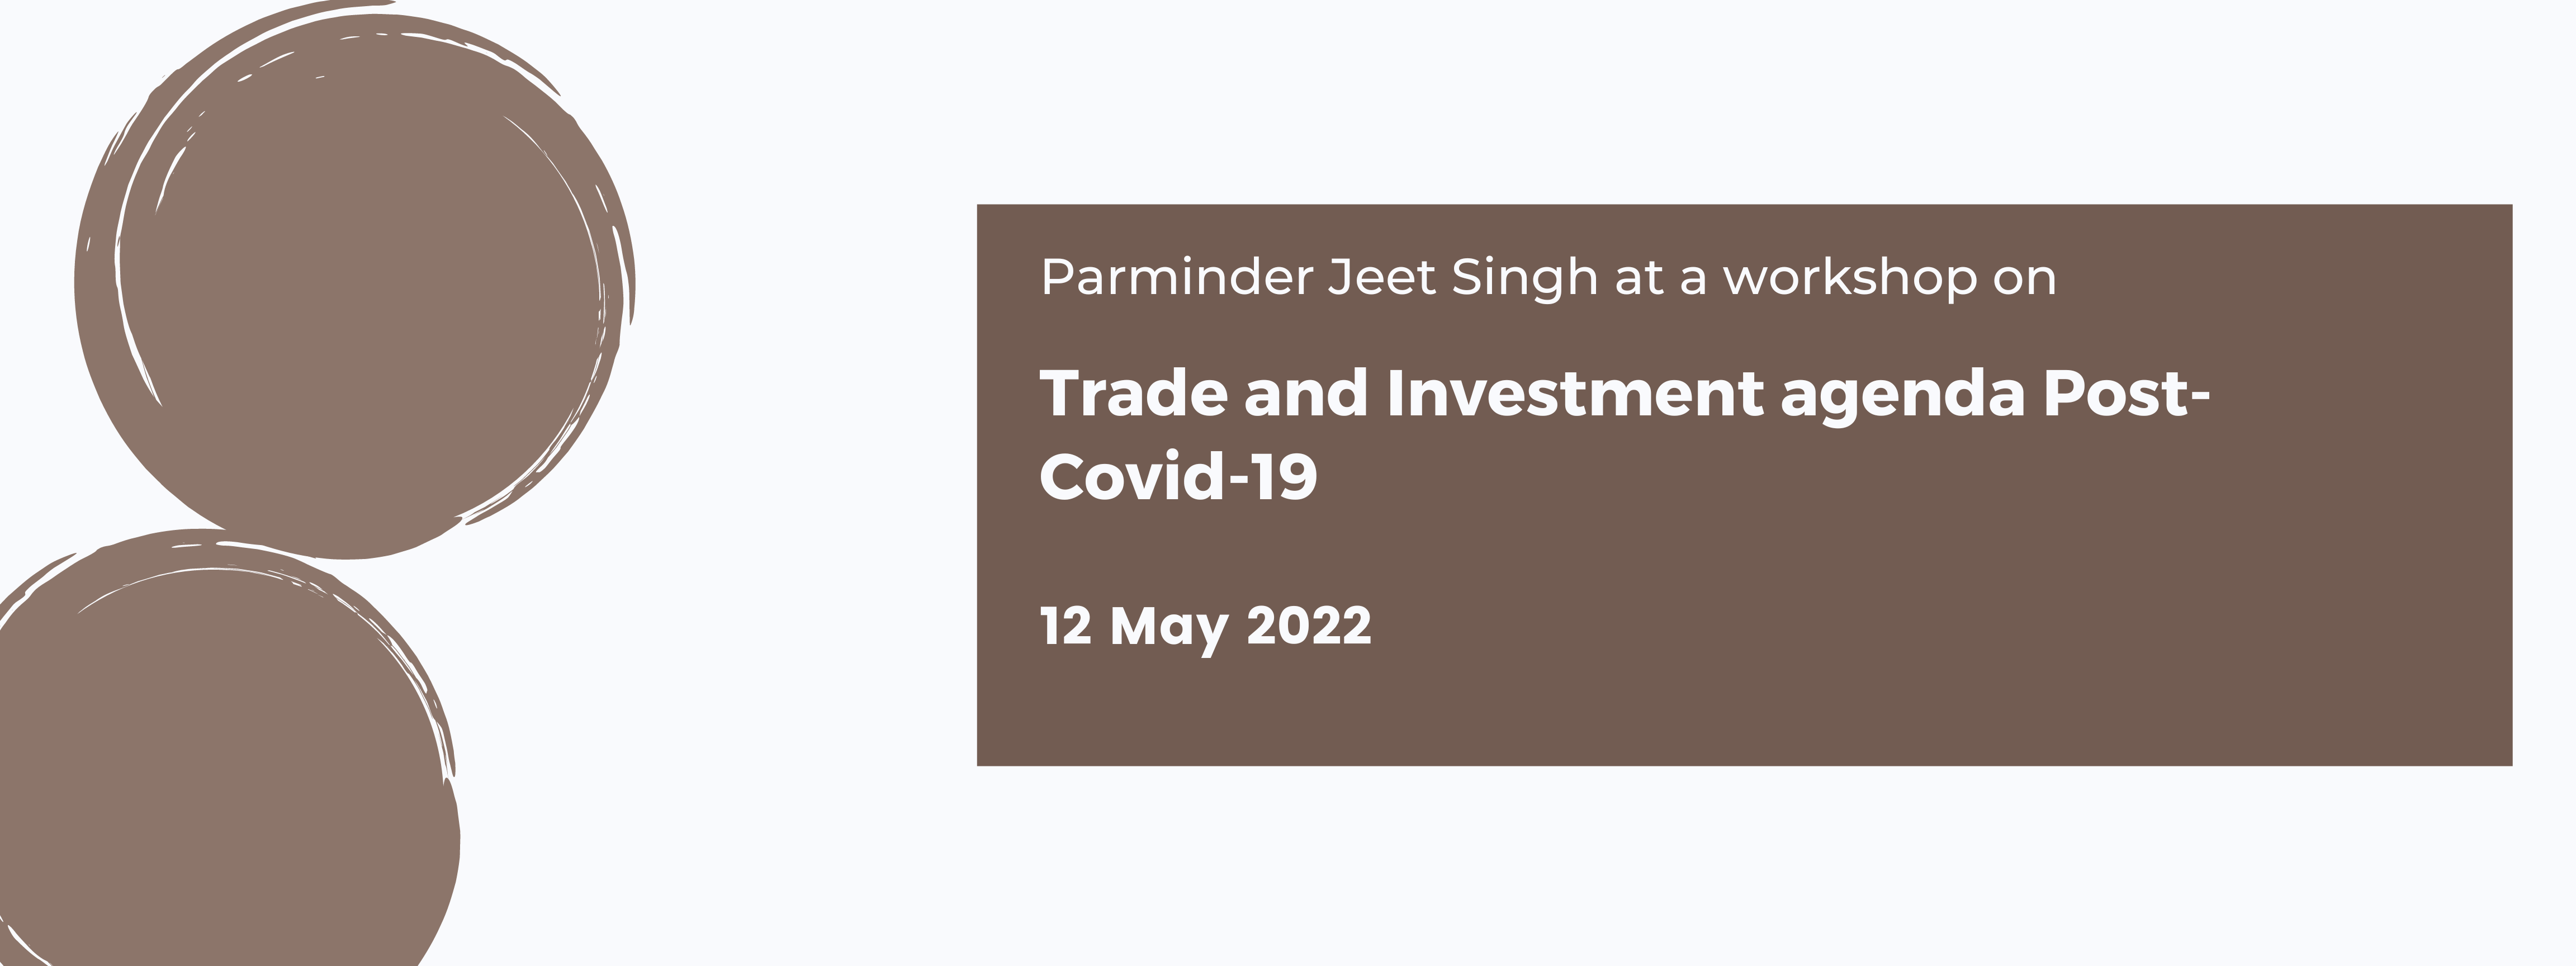 Trade and Investment agenda Post-Covid-19